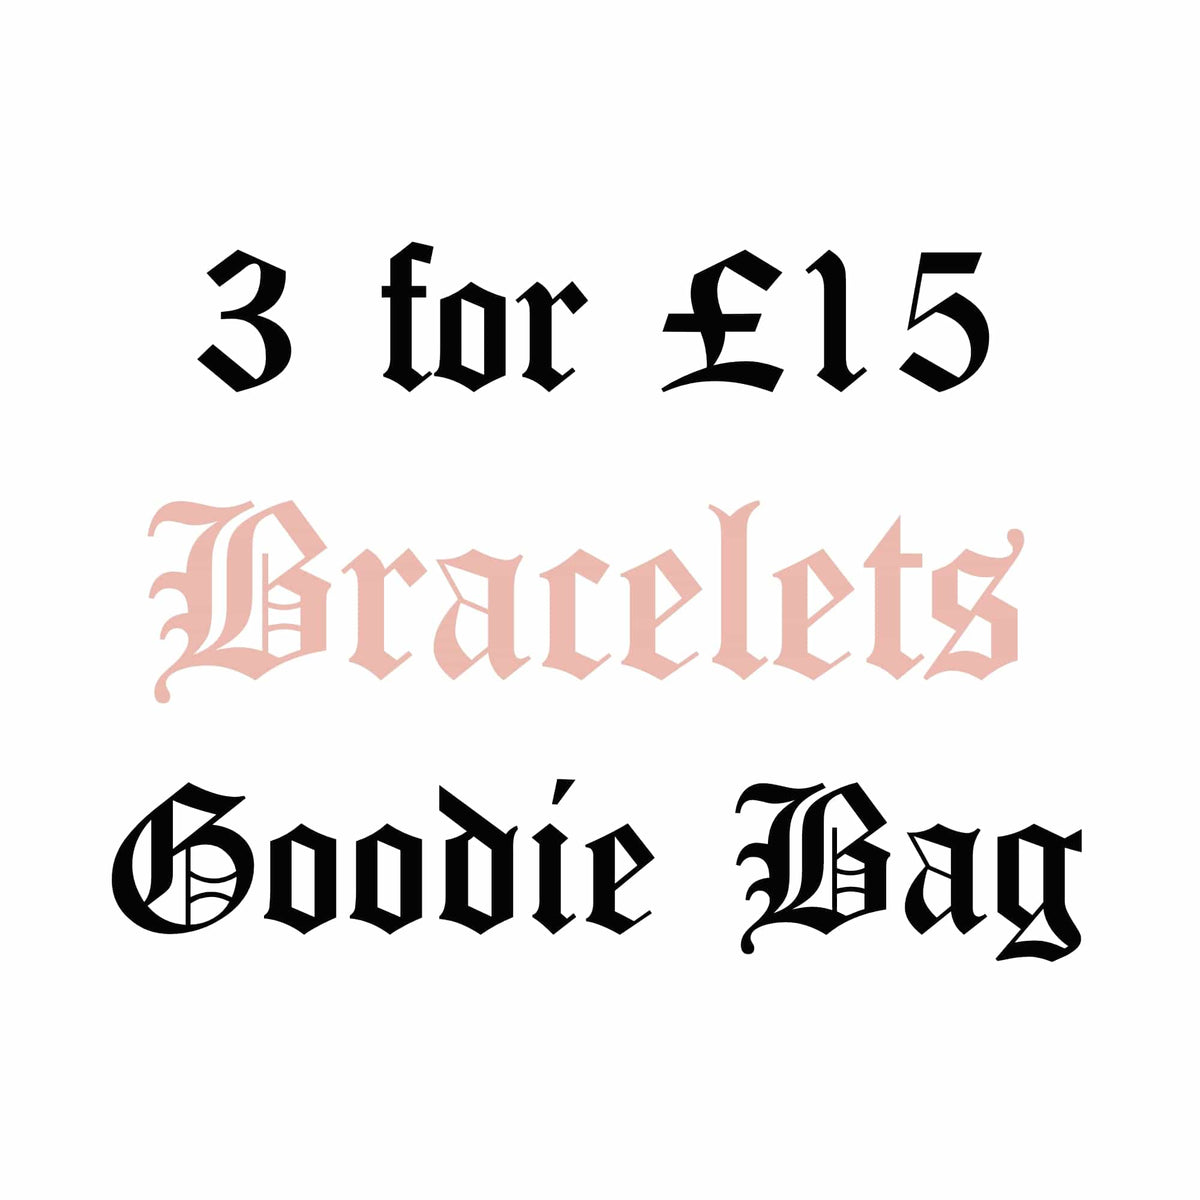 BOHOMOON Stainless Steel 3 for £15 Goodie Bag - Bracelets